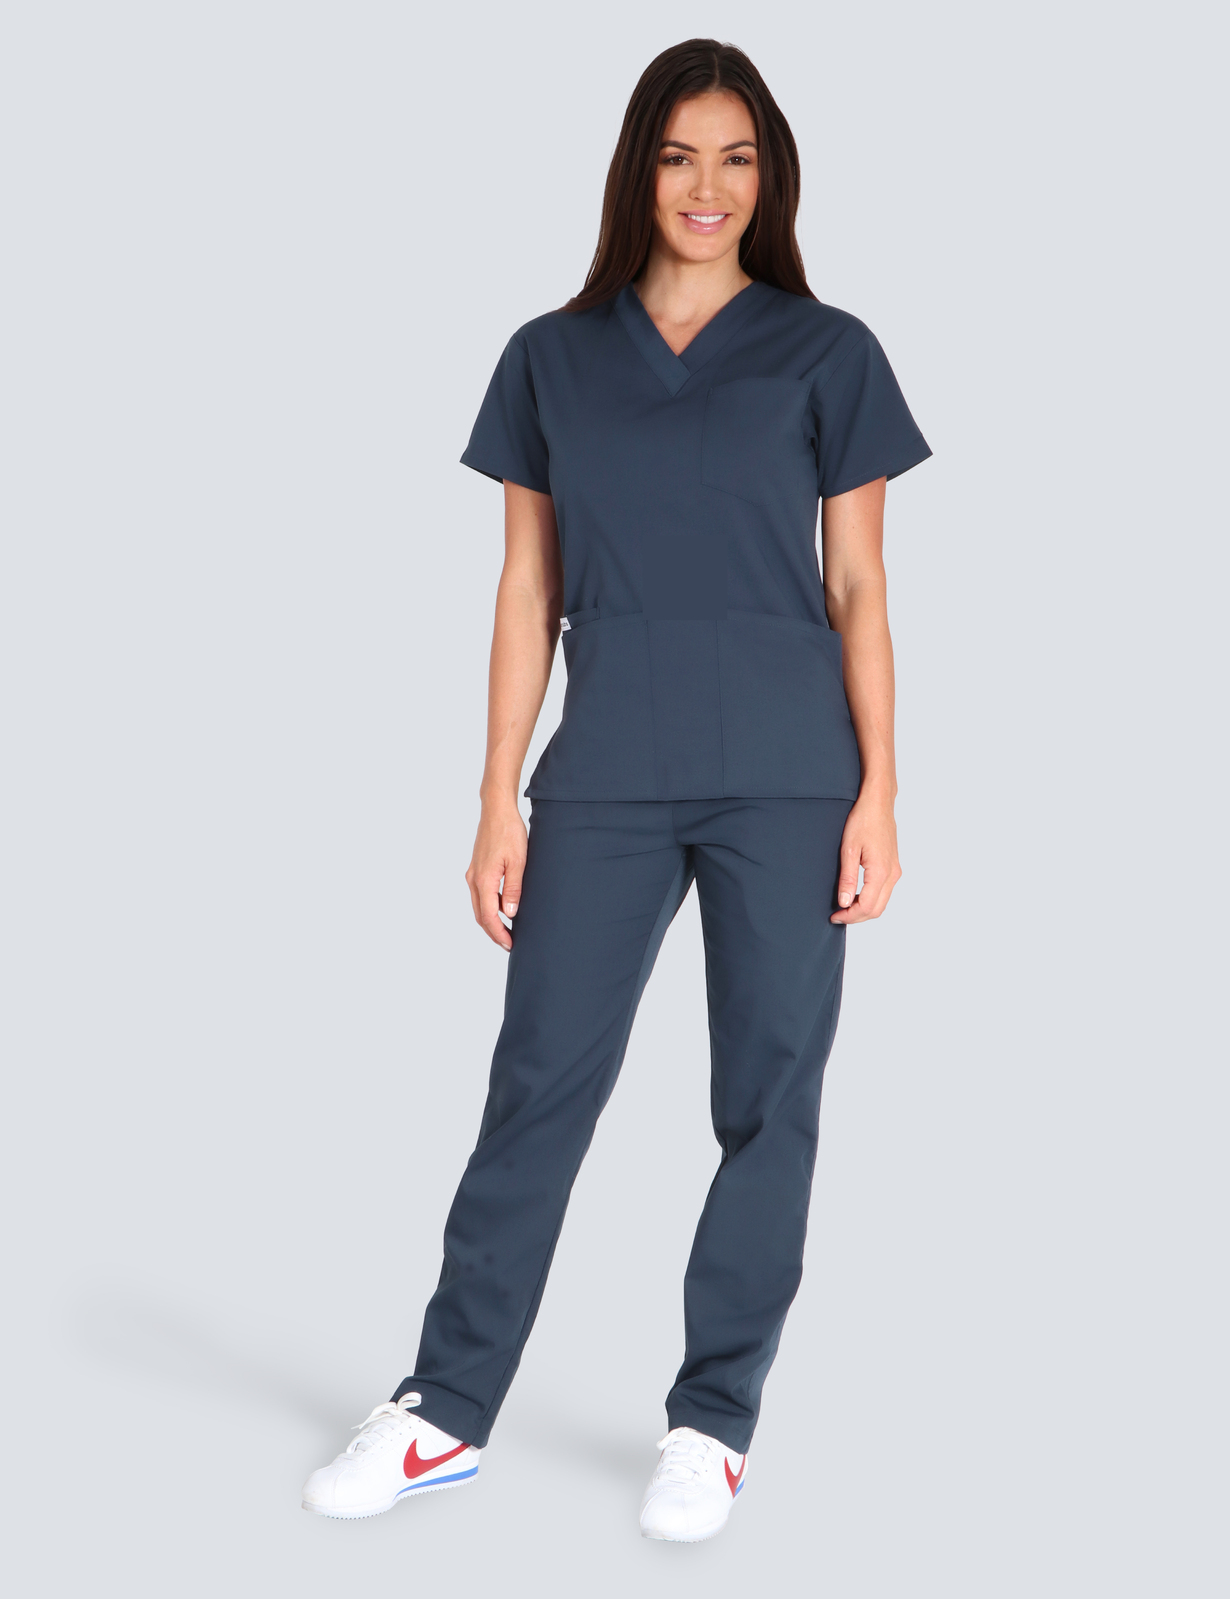 Rockhampton Hospital Special Care  Uniform Set Bndle (4 Pocket Top and Cargo Pants in Navy + Logos)